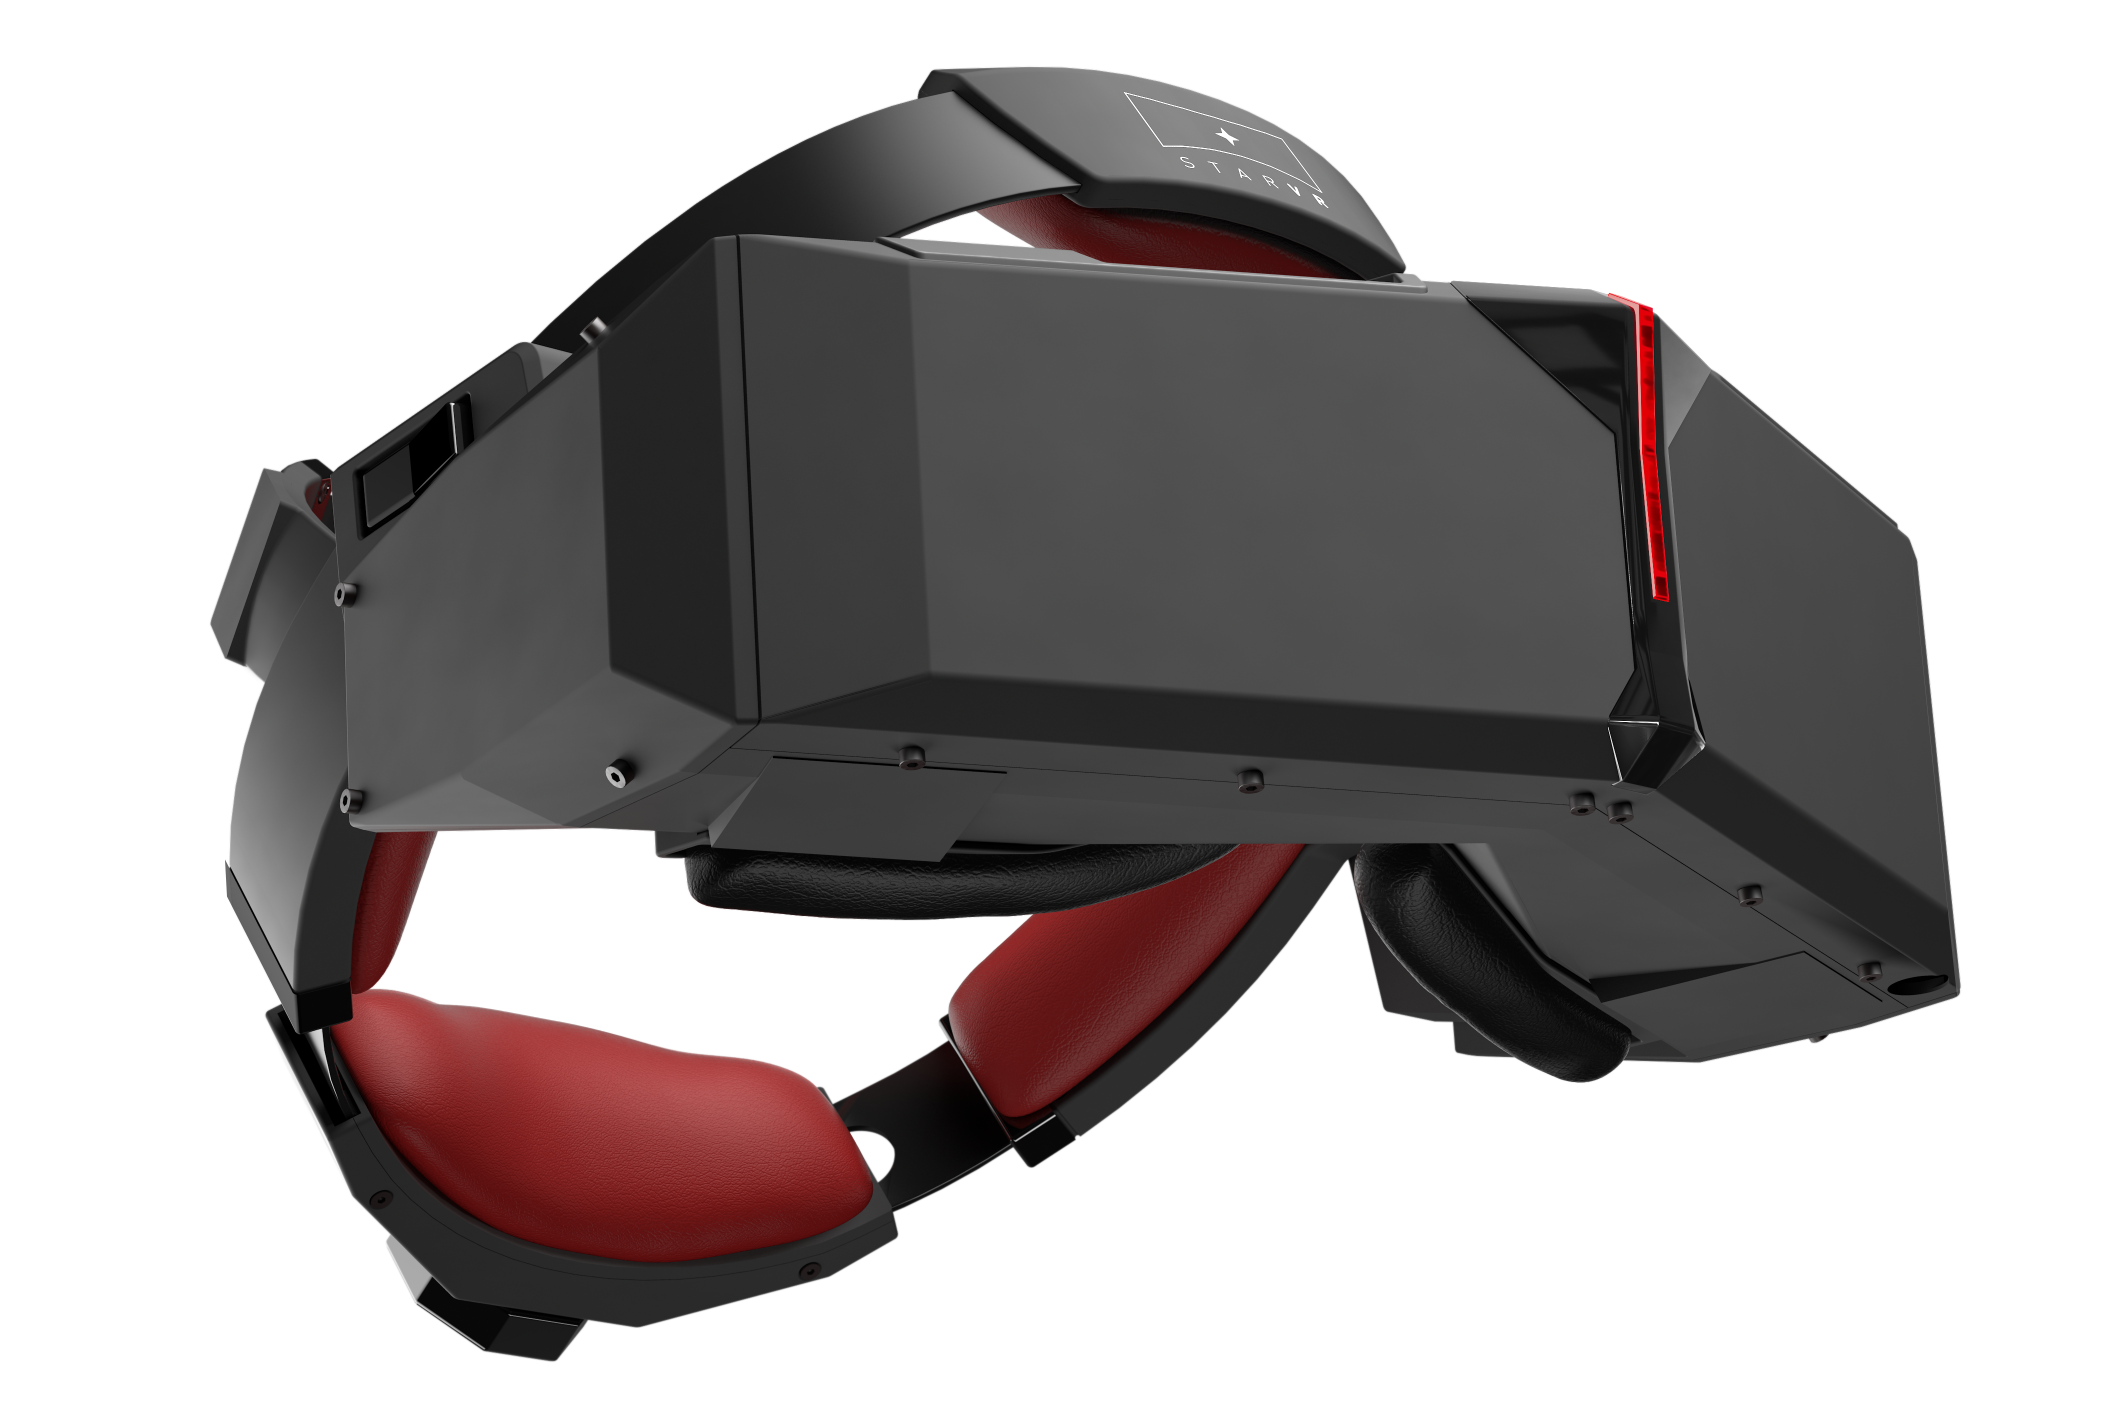 StarVR Virtual Reality Headset